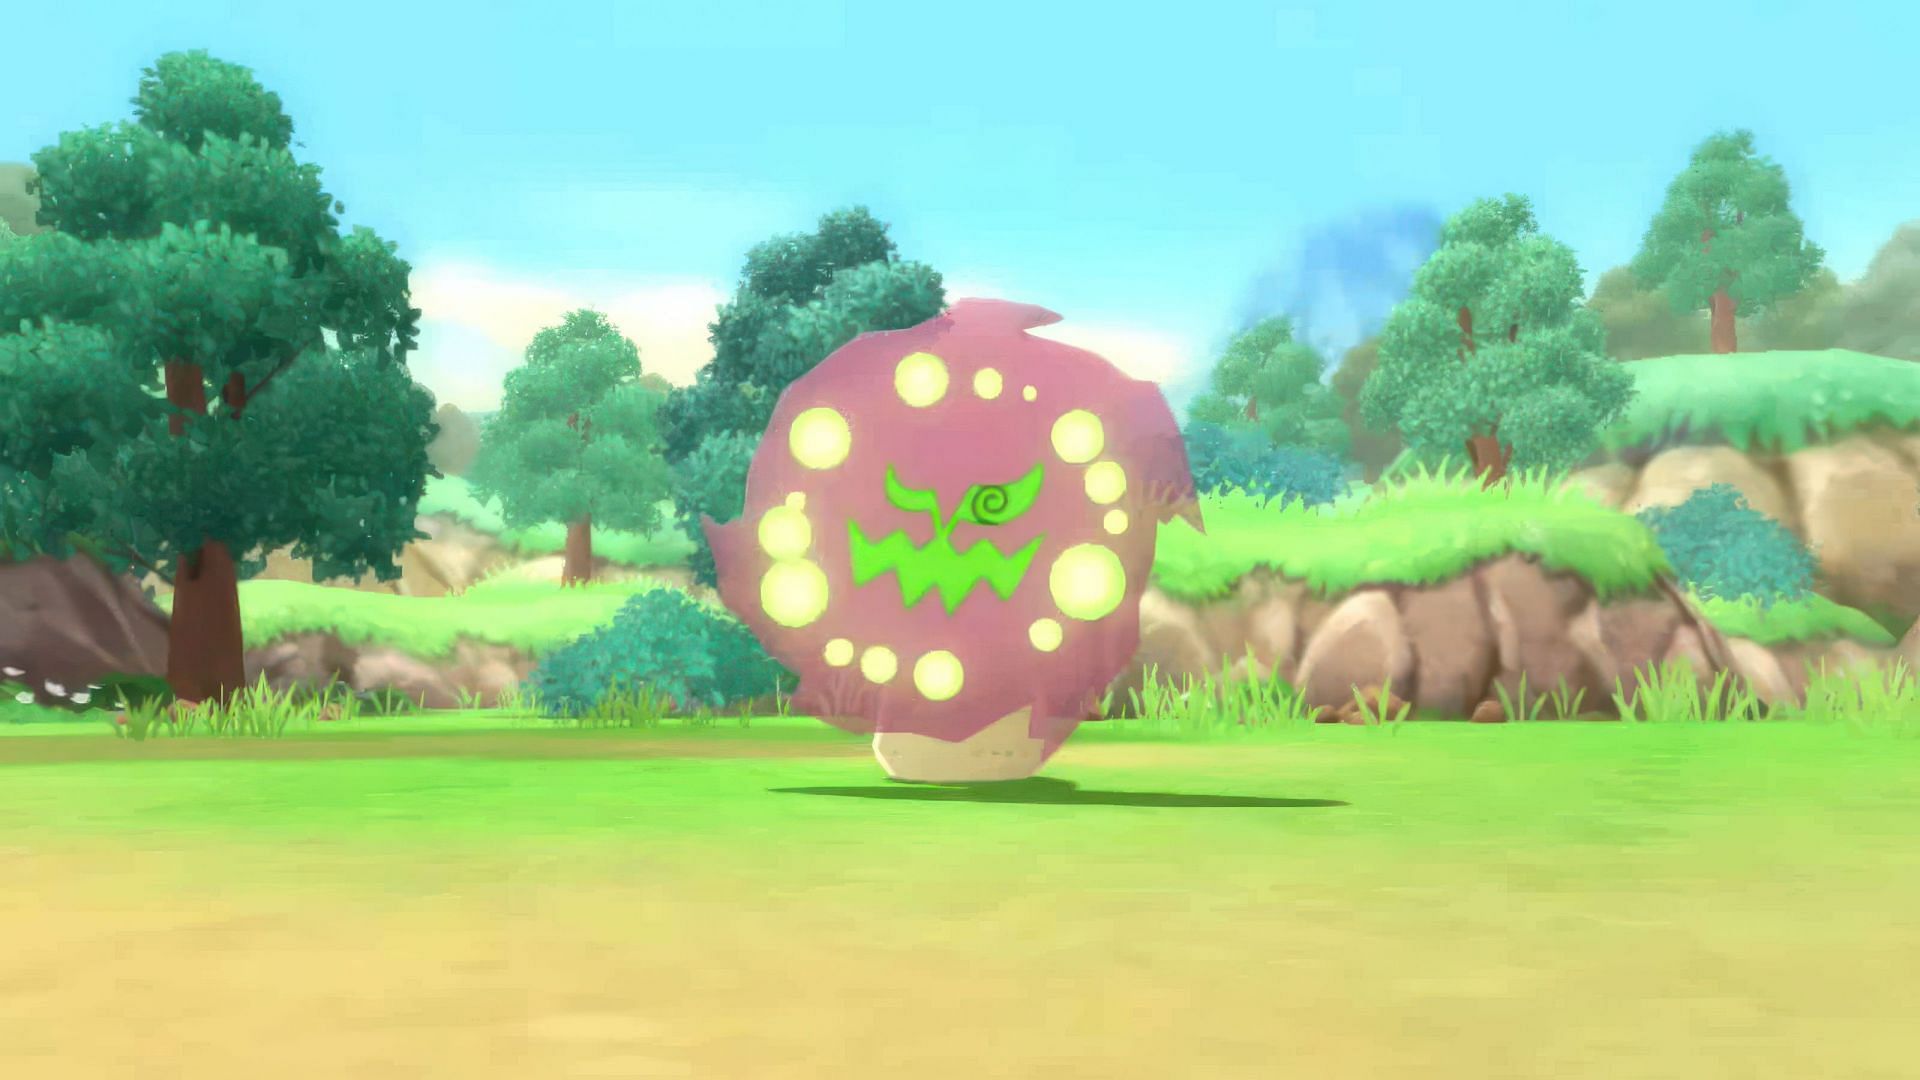 How to get Spiritomb in Pokémon Go: Catch guide, Shiny odds, more - Dot  Esports